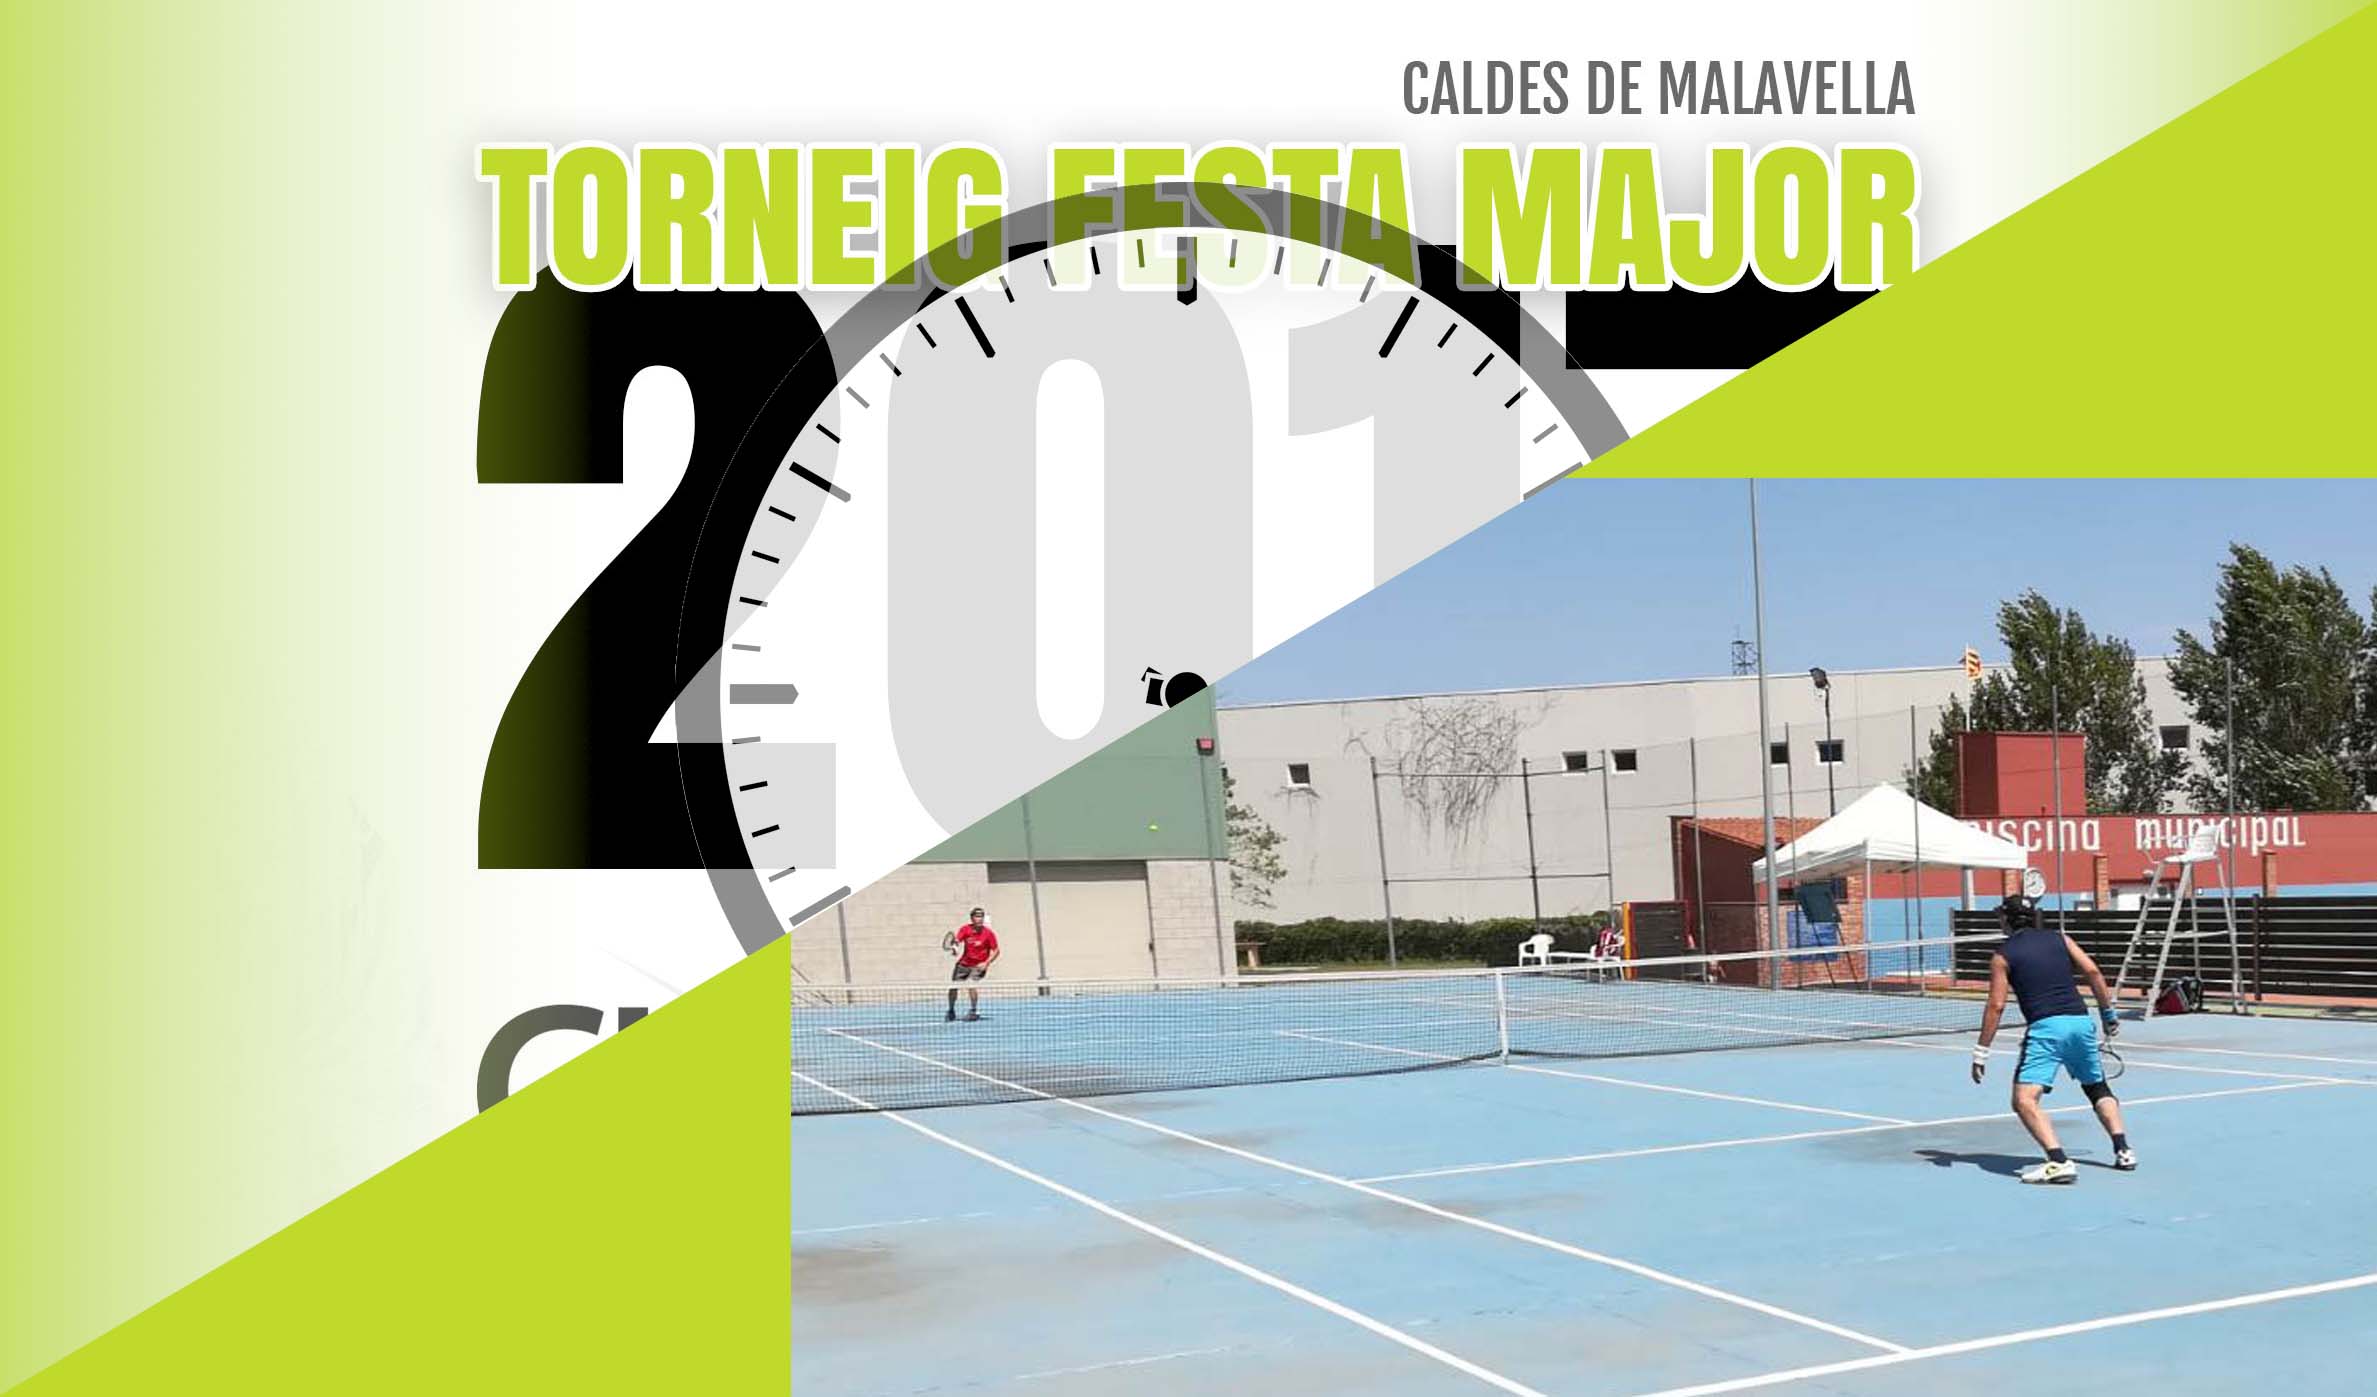 Tennis Caldes de Malavella. Torneig de Festa Major 2017